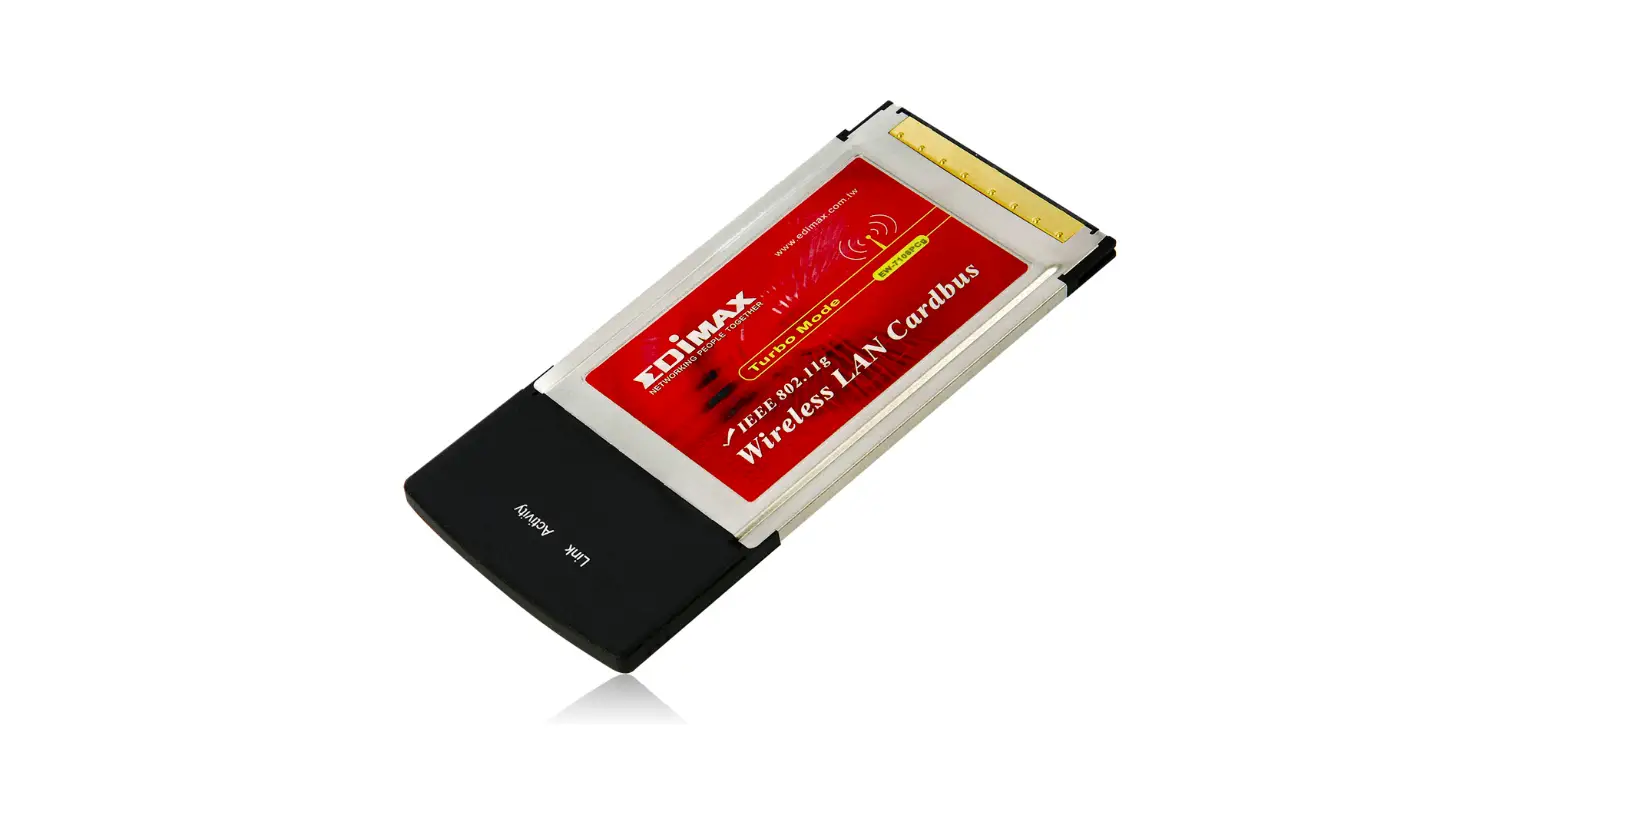 Edimax Wireless LAN Cardbus Adapter